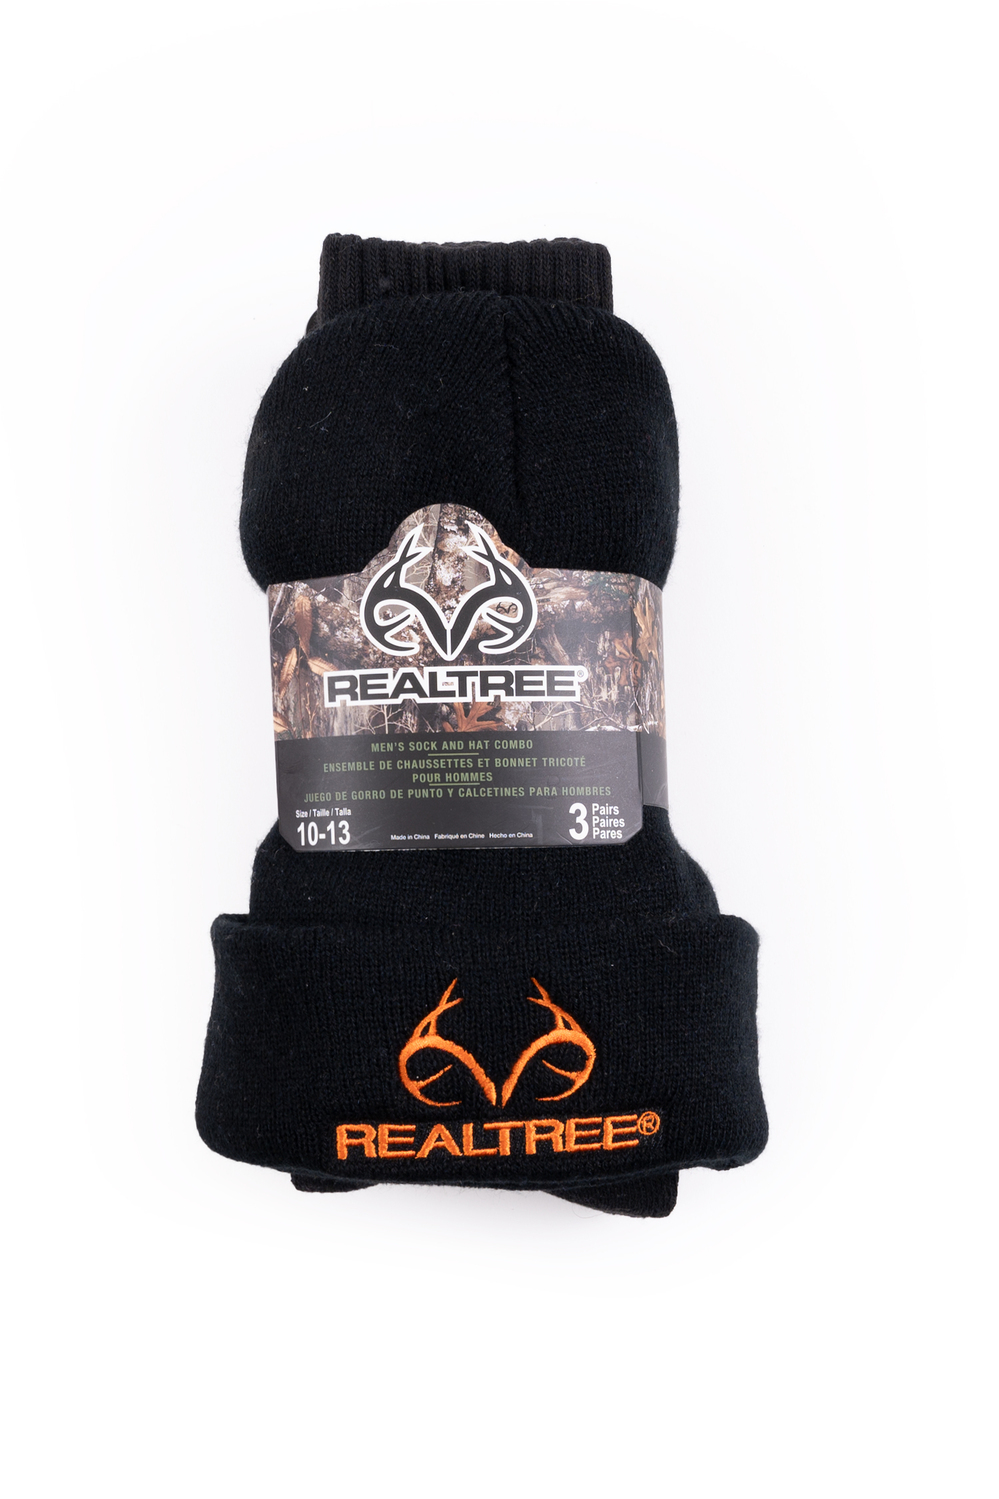 Realtree - Men's socks and beanie combo